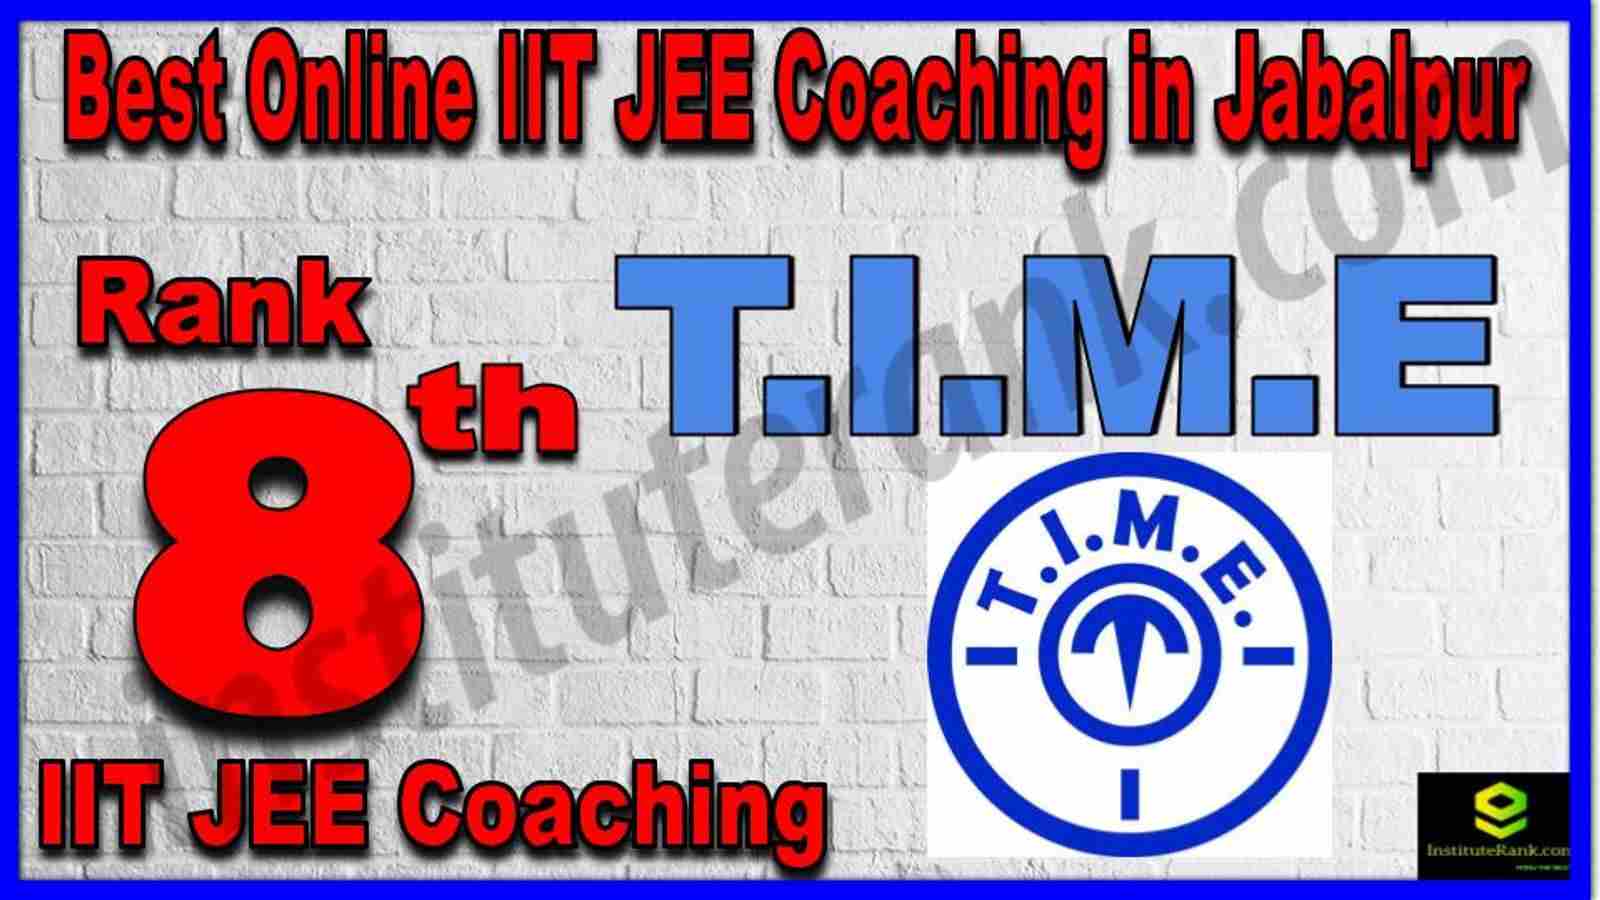 Rank 8th Best Online IIT JEE Coaching in Jabalpur